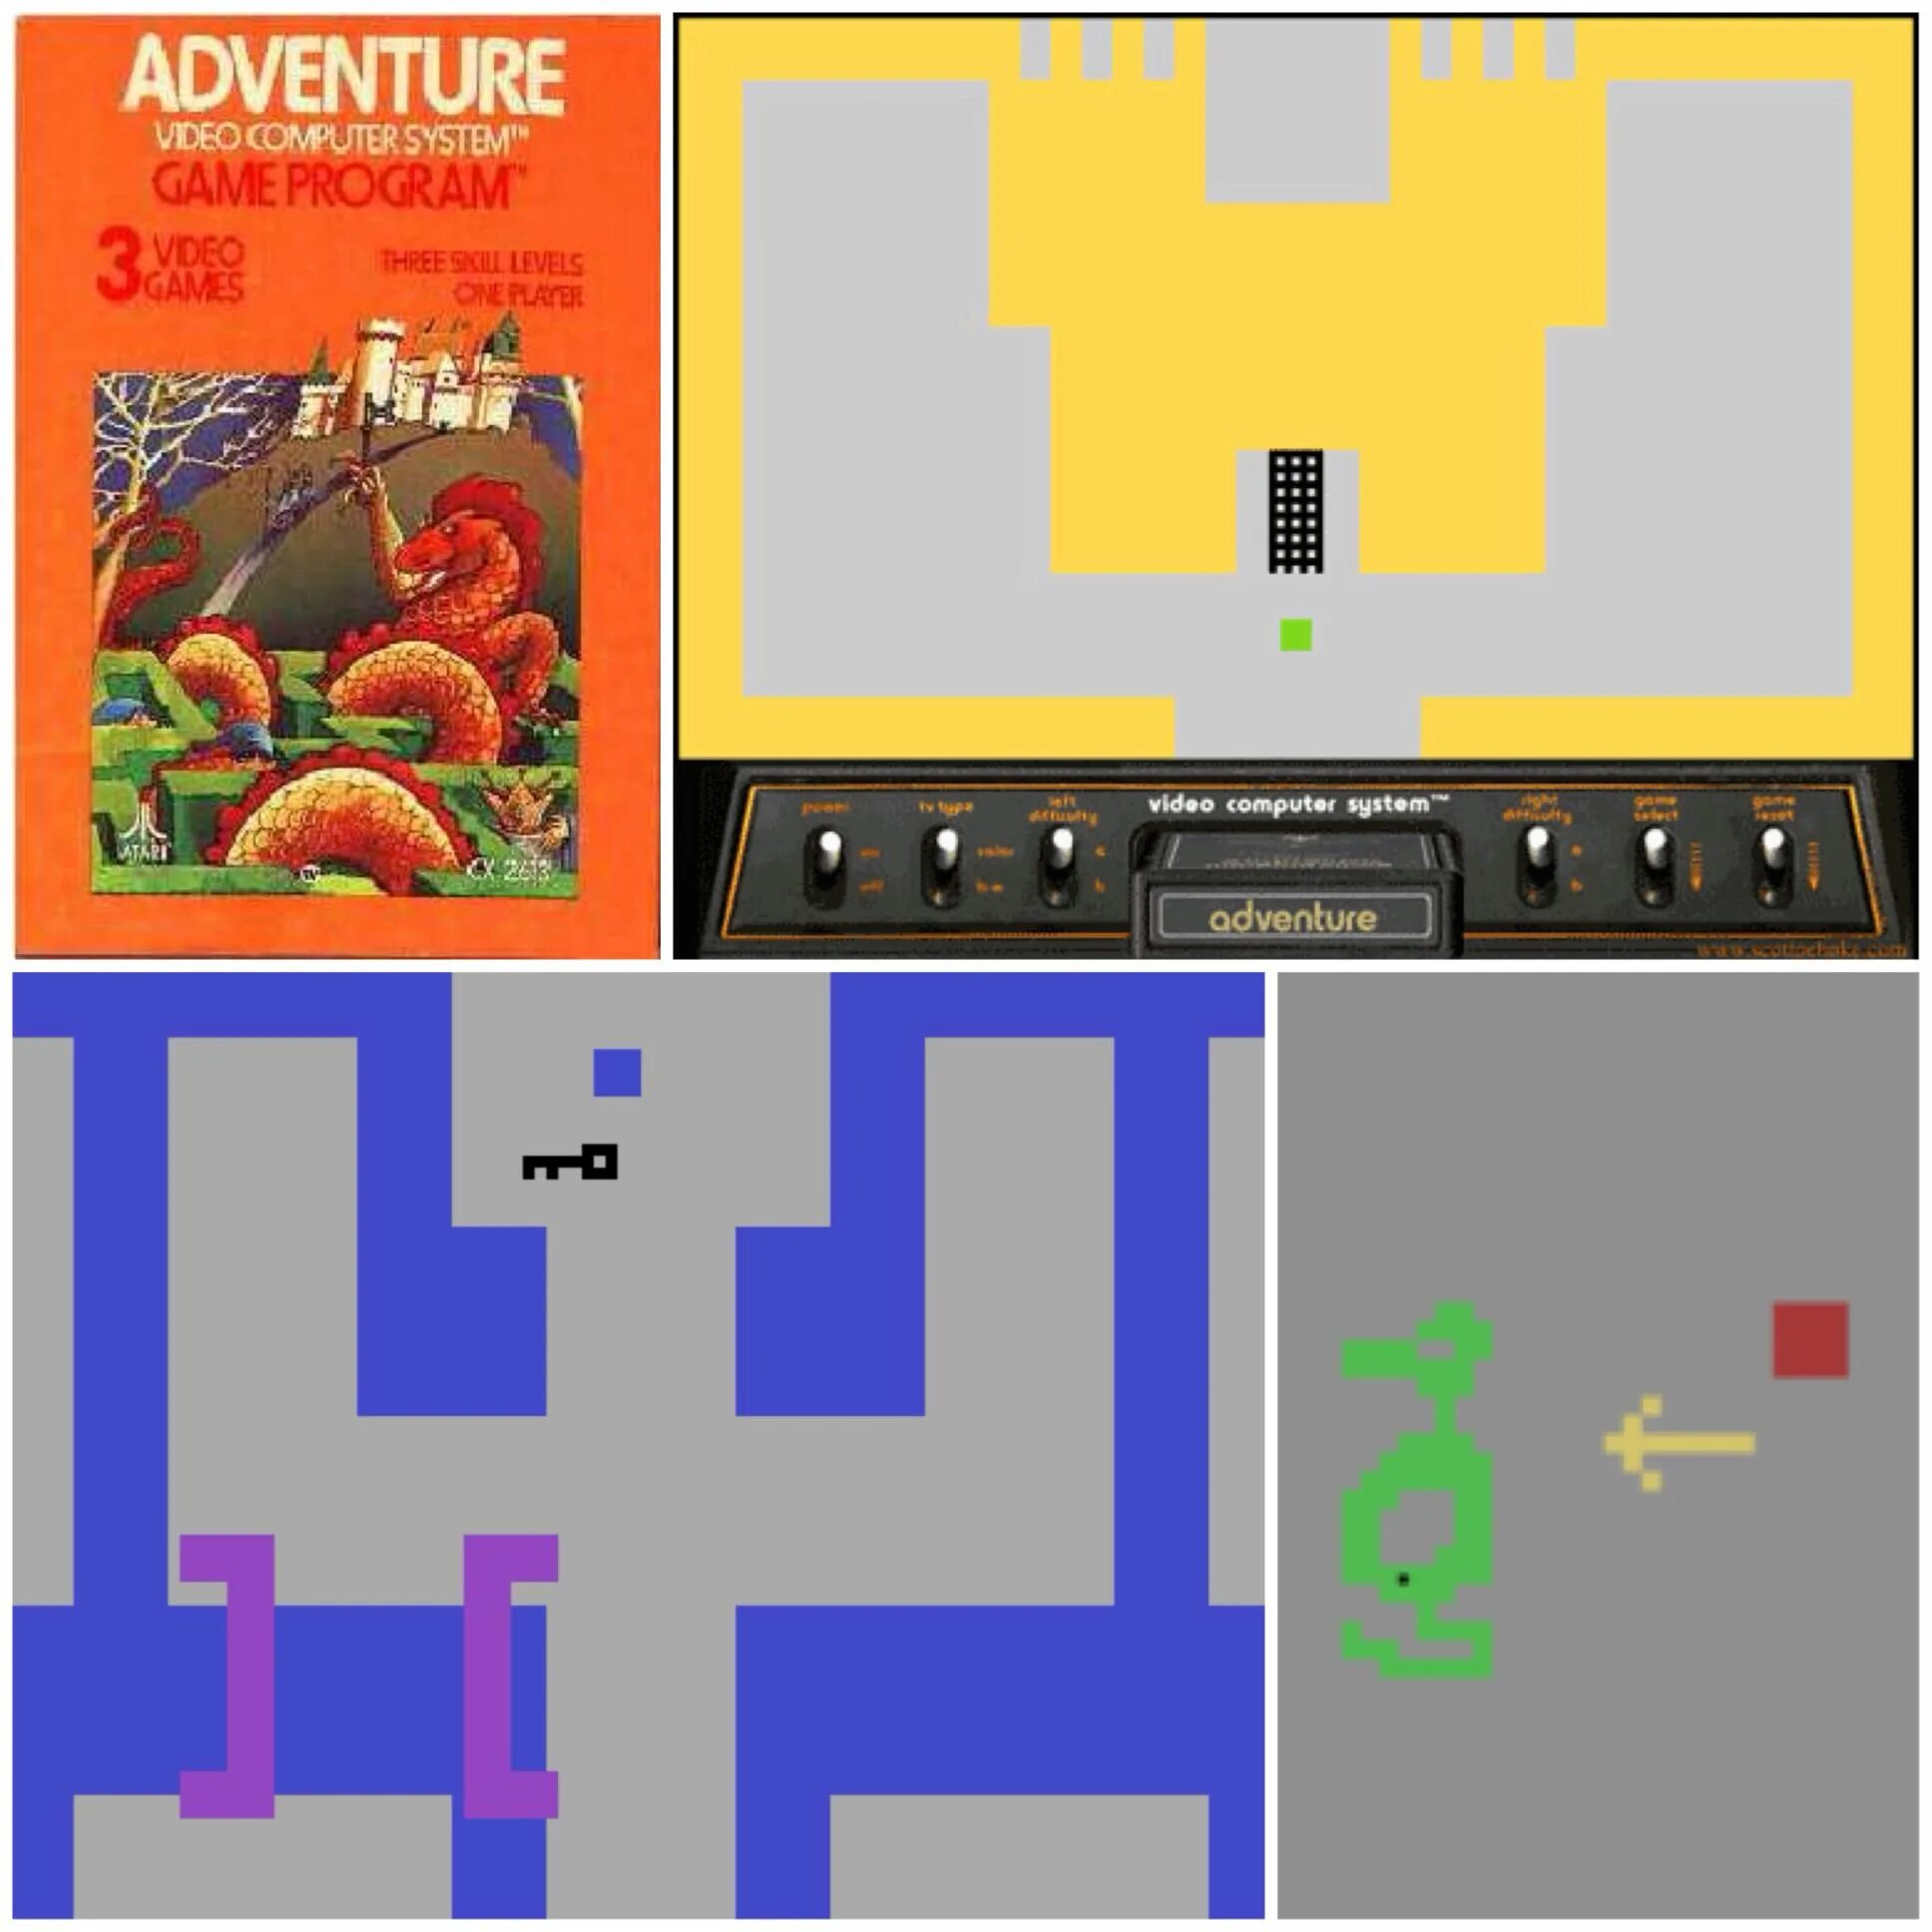 Адвенчер игра Атари. Адвенчер игра 1979. Adventure игра 1979 собака. Atari 2600 игры. Play like atari